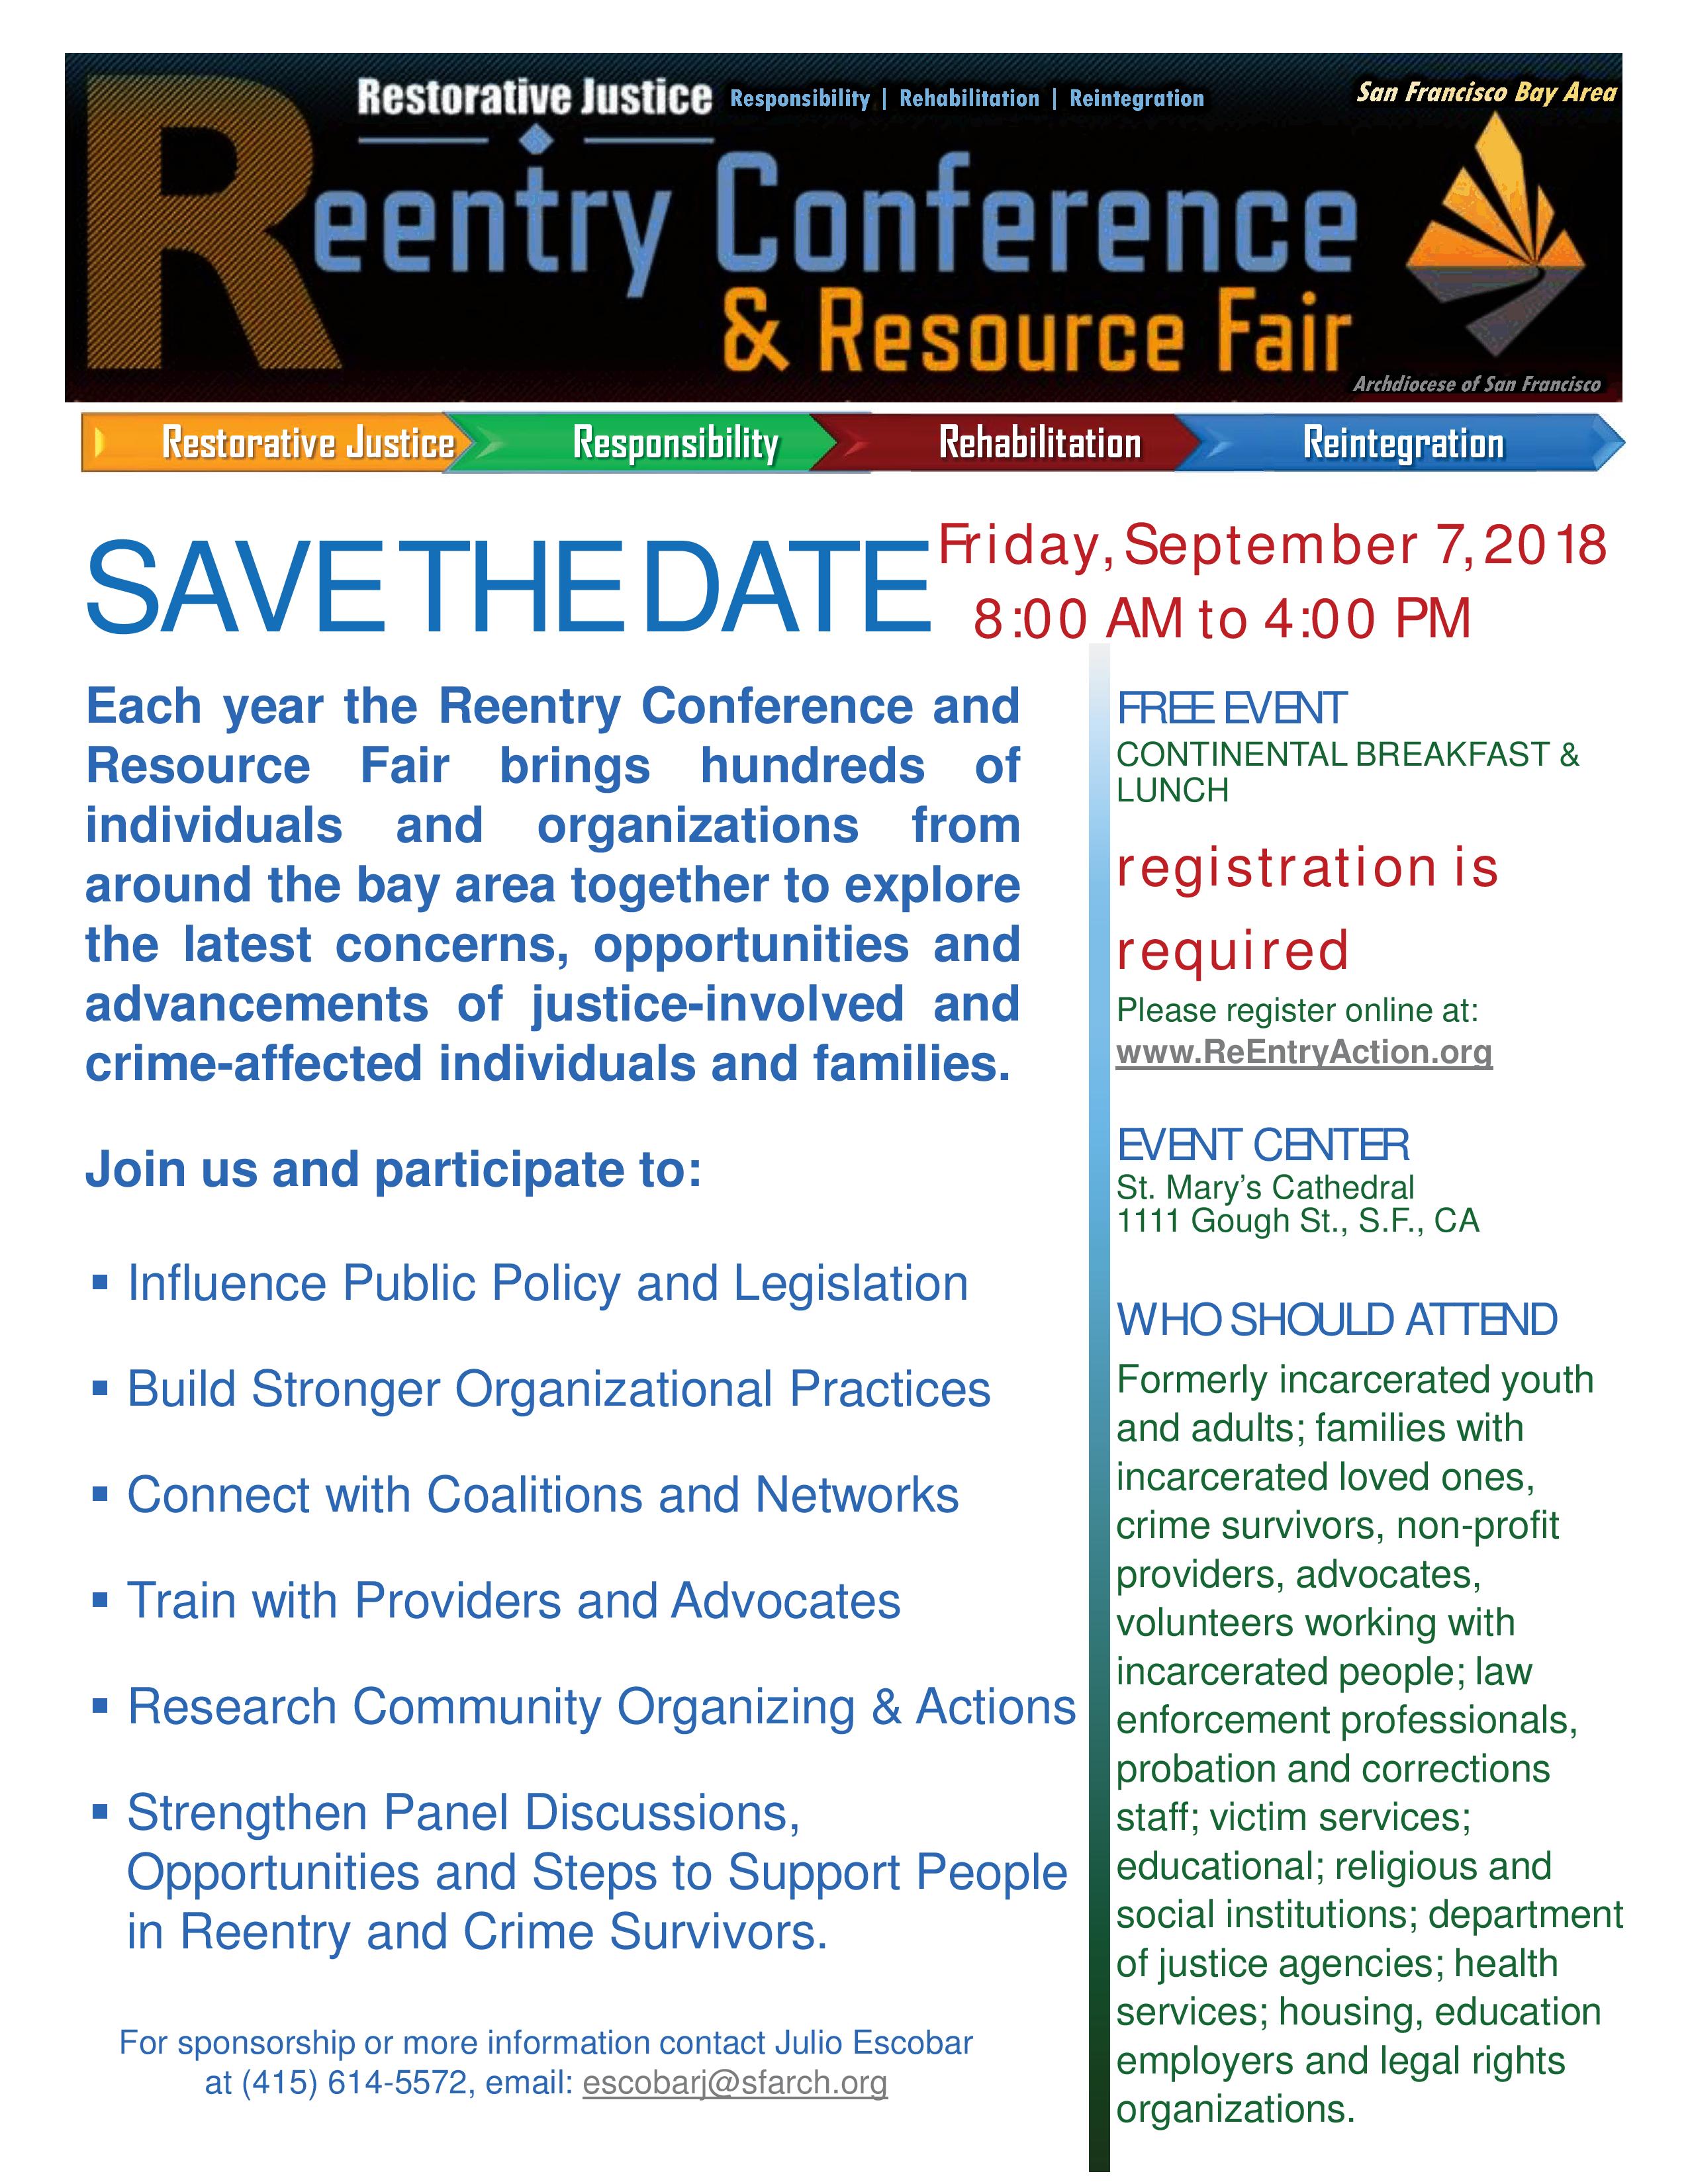 Reentry Conference & Resource Fair San Francisco Interfaith Council